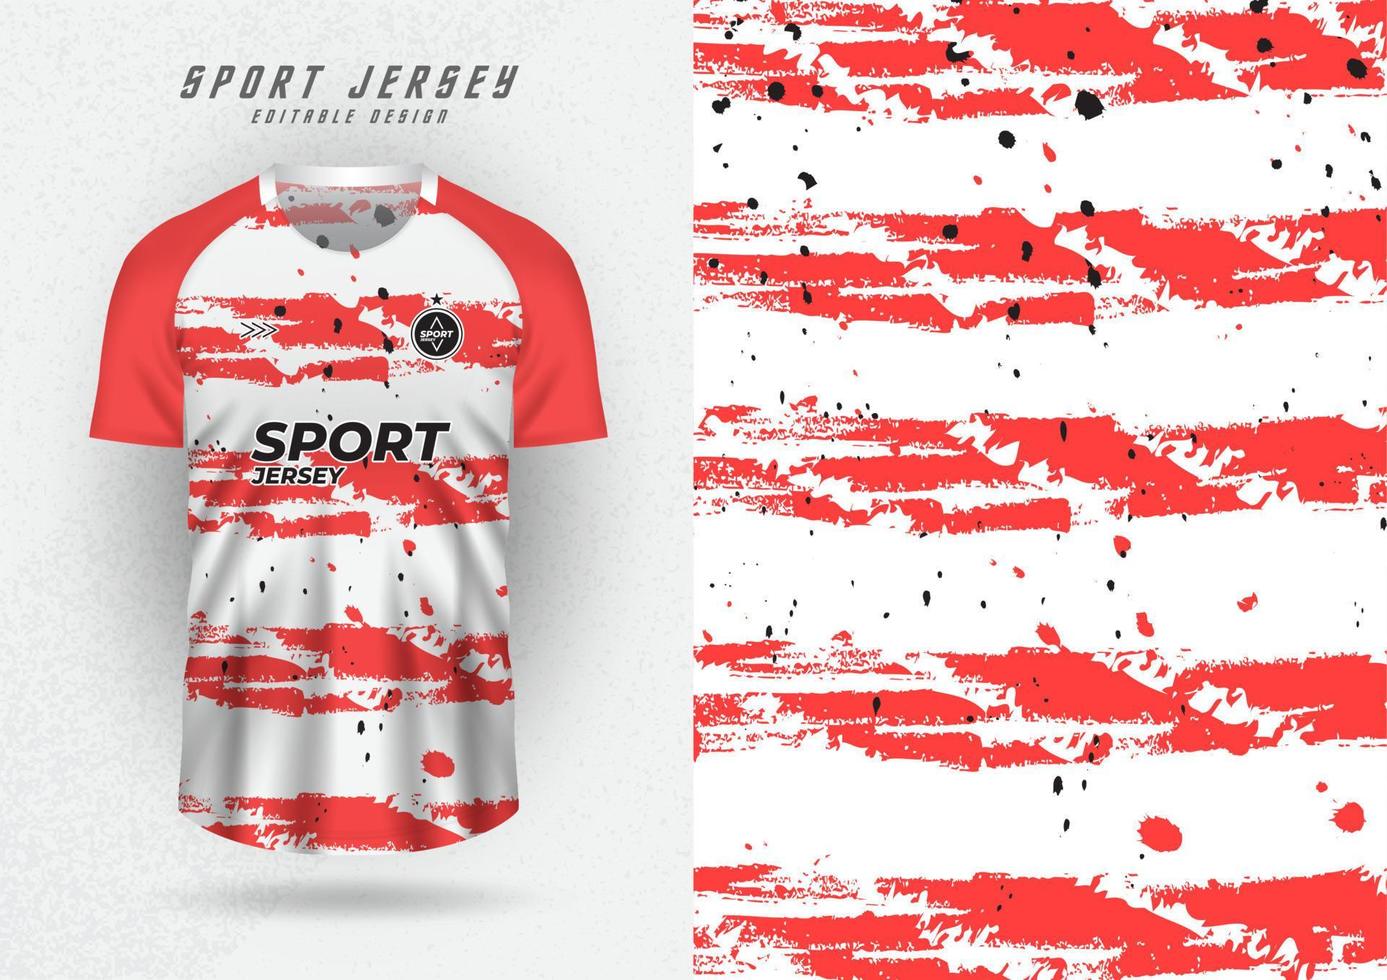 Background mockup for sports jerseys, jerseys, running jerseys, red freebies. vector